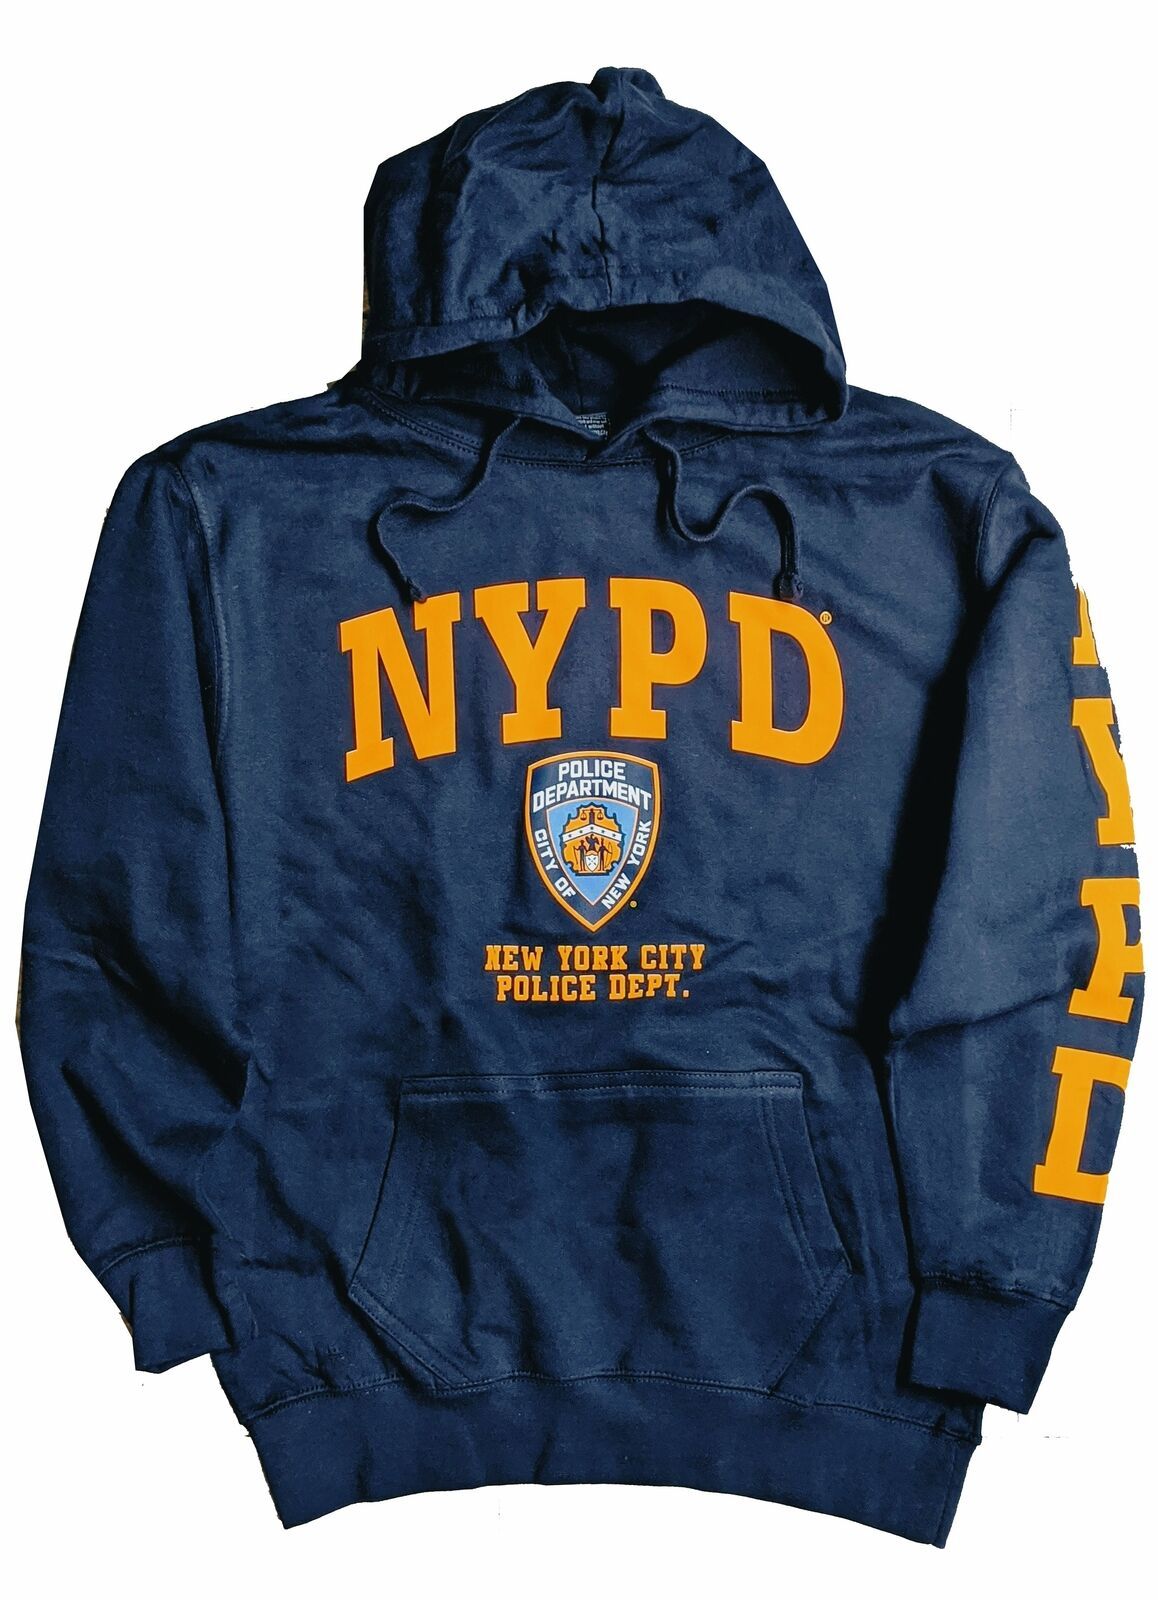 NYPD Hoodie Yellow Sleeve Print Sweatshirt Navy Blue New York City Police Gift - $39.99